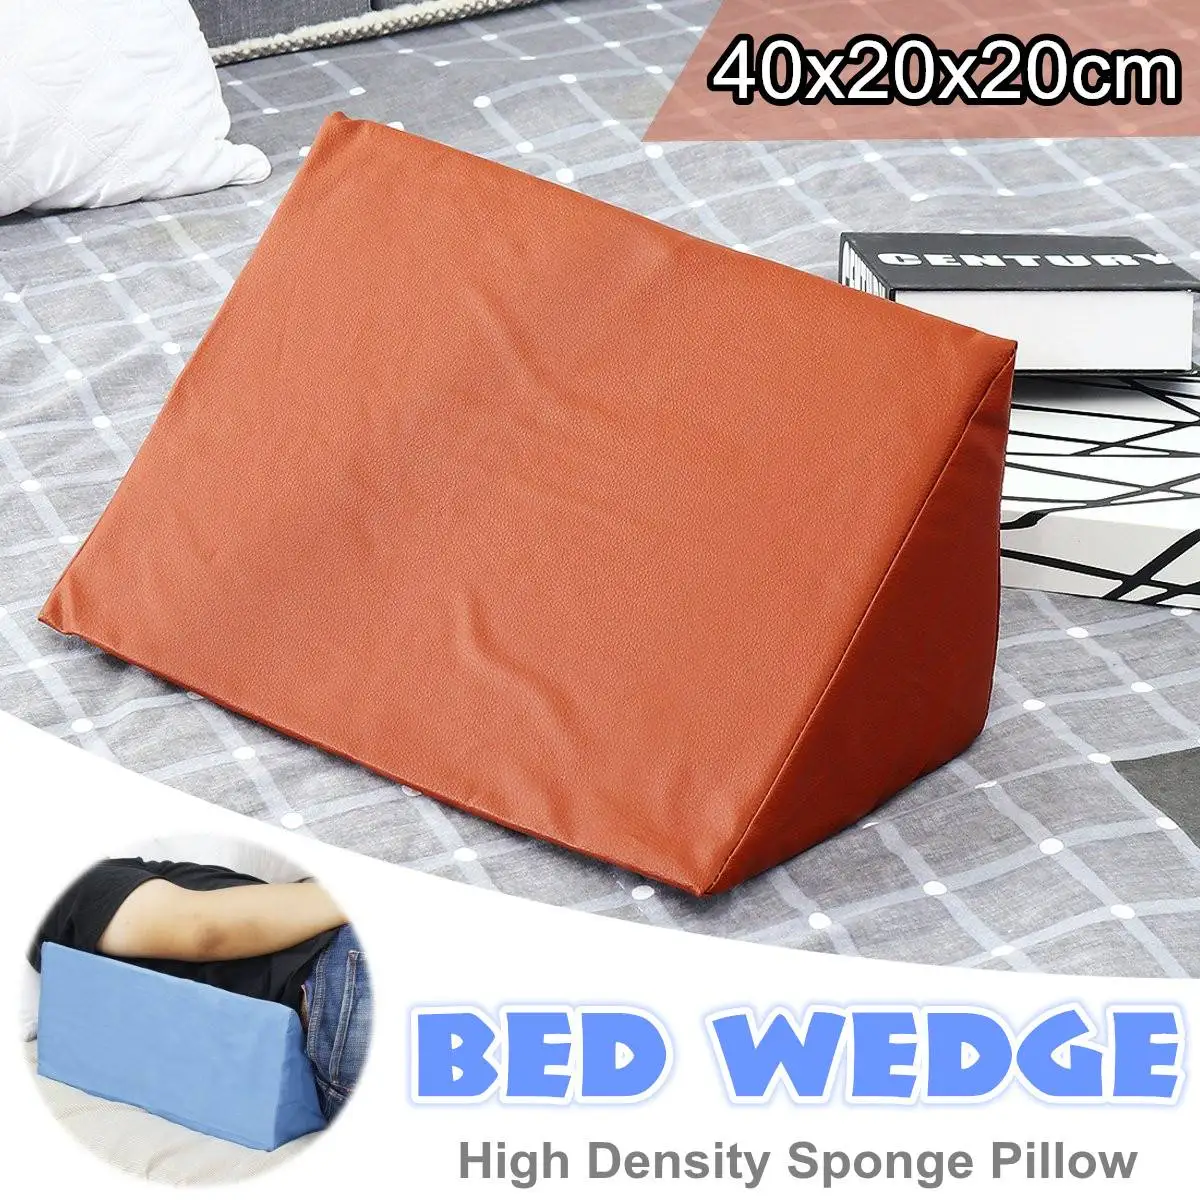 

Orthopedic Acid Reflux Bed Wedge Sponge Cotton Pillow Back Leg Elevation Cushion Lumbar Support Bedding Pad Zipper Large Size